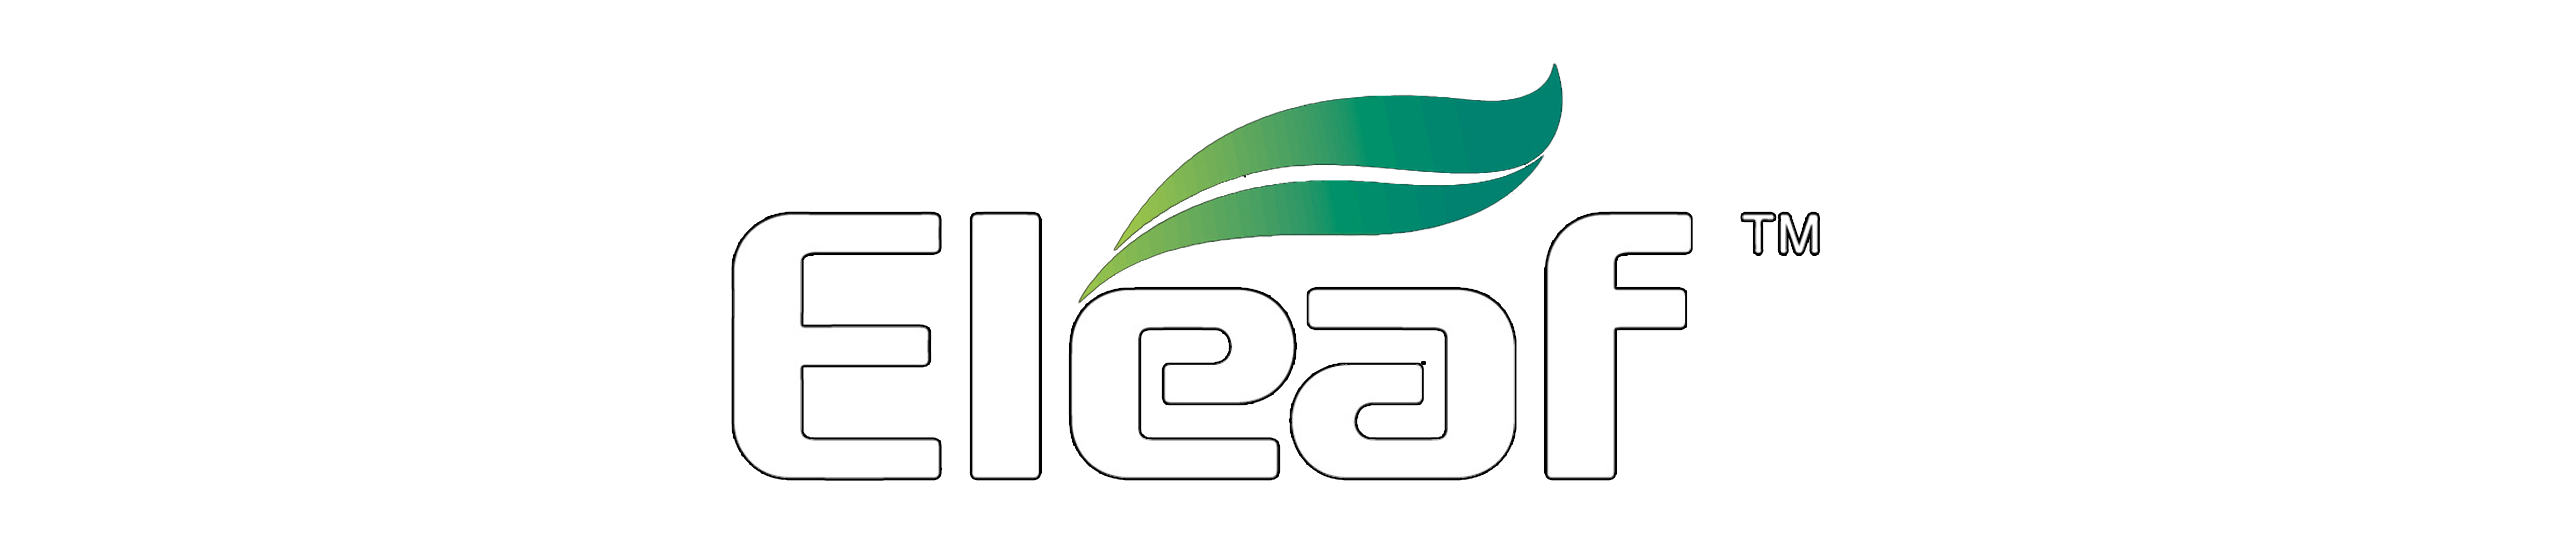 Logo des E-Zigarettenherstellers Eleaf